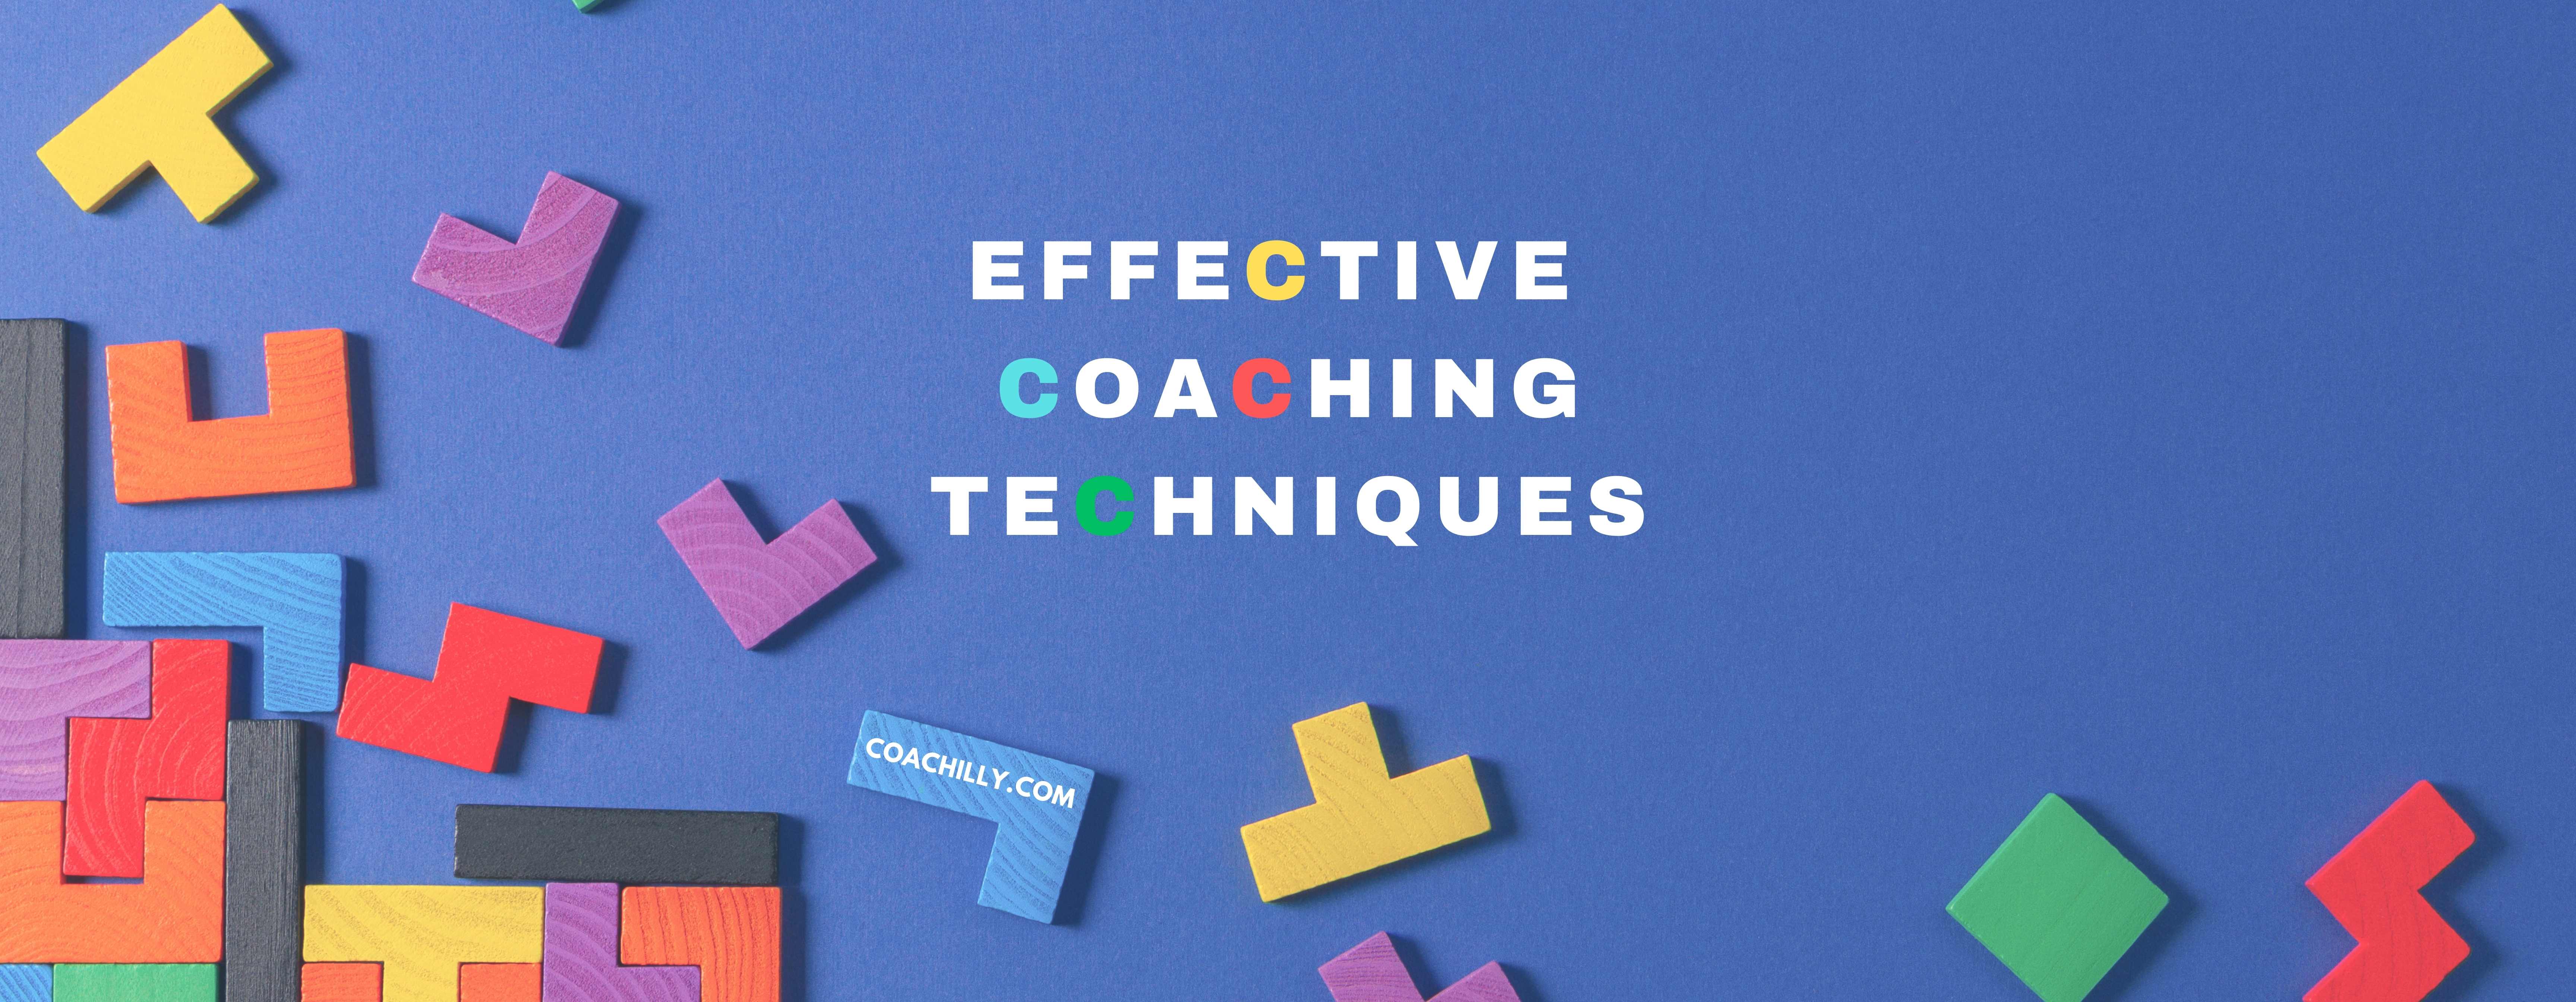 Effective Coaching Techniques - Header Image